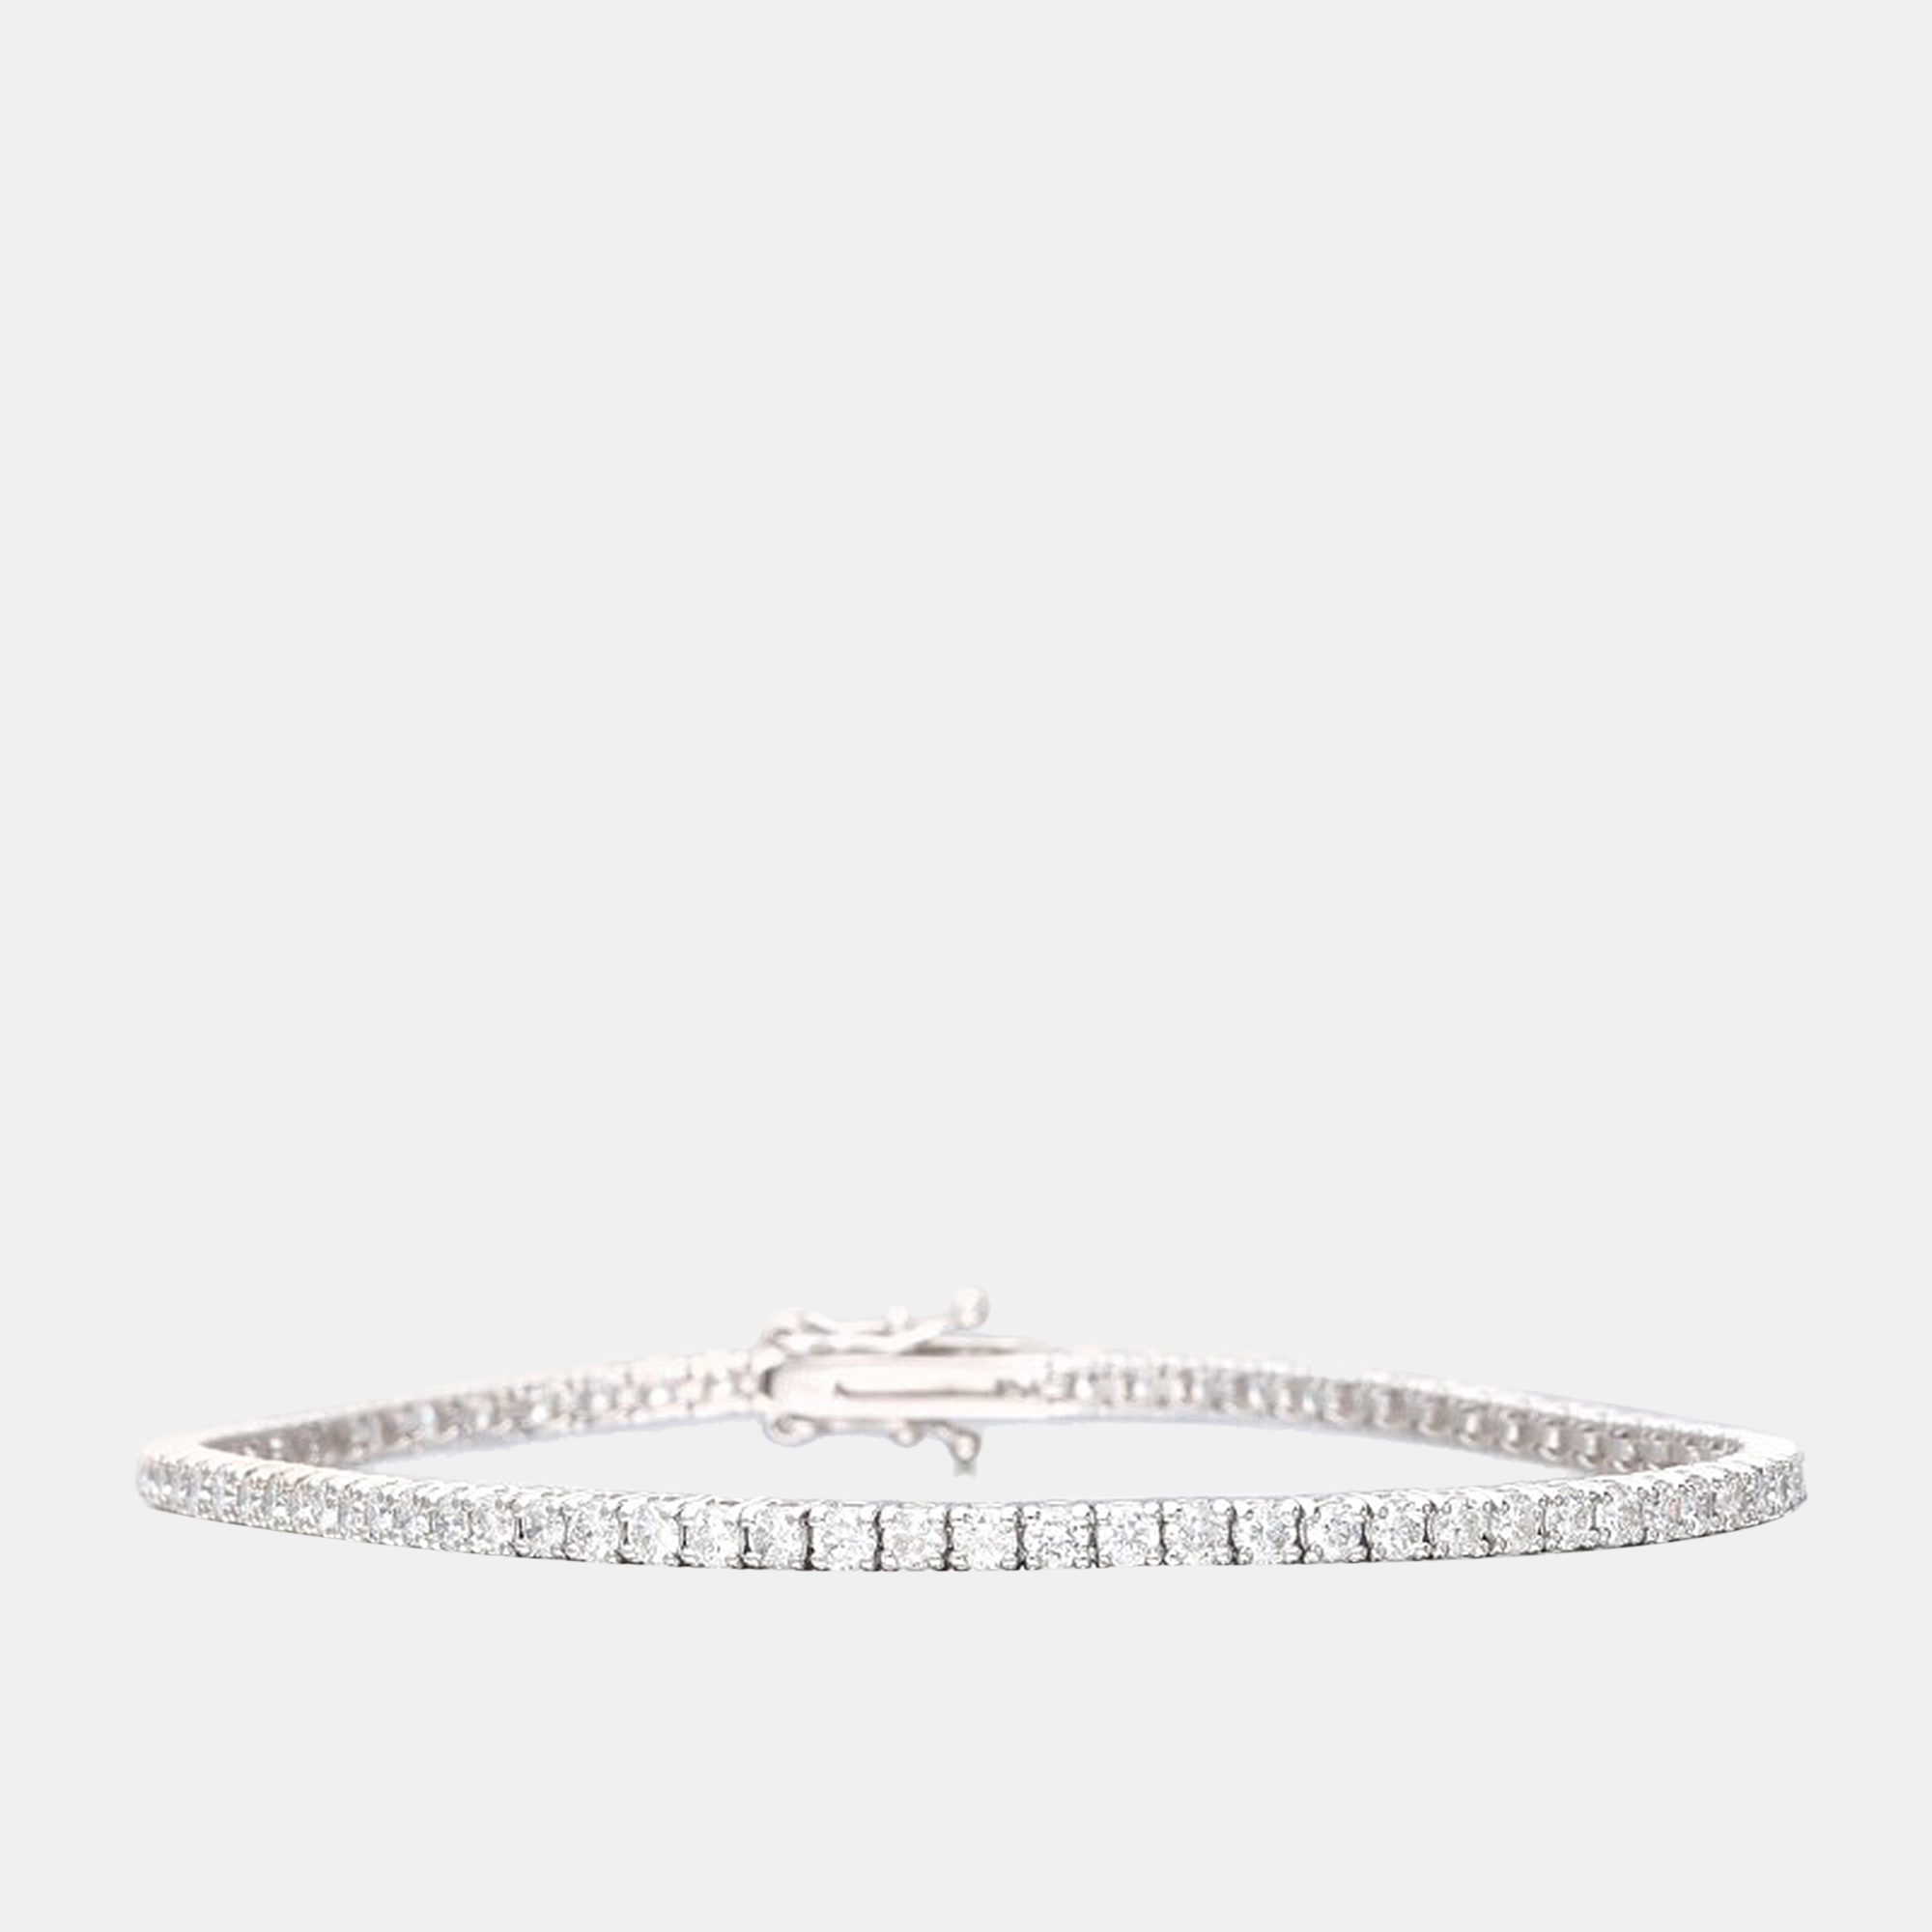 The diamond edit 18k white gold diamond 0.03 ct. (each) tennis bracelet